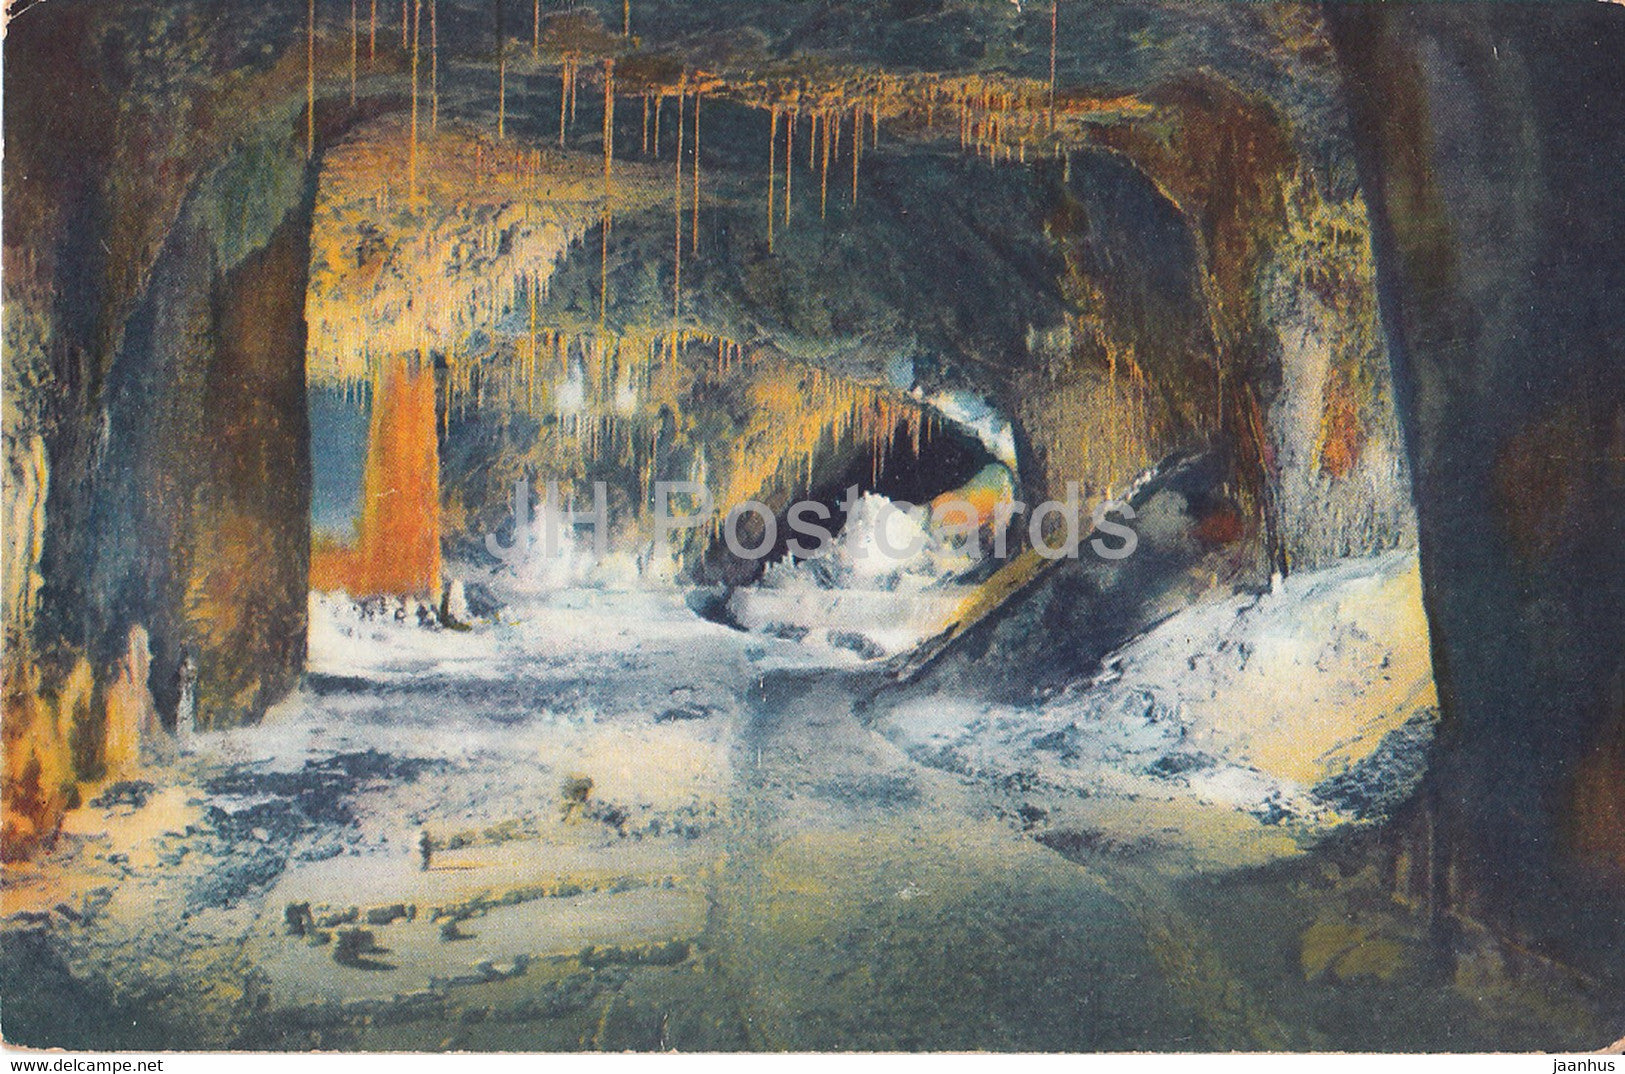 Feengrotten bei Saalfeld in Thur - Marchendom - cave - old postcard - 1928 - Germany - used - JH Postcards